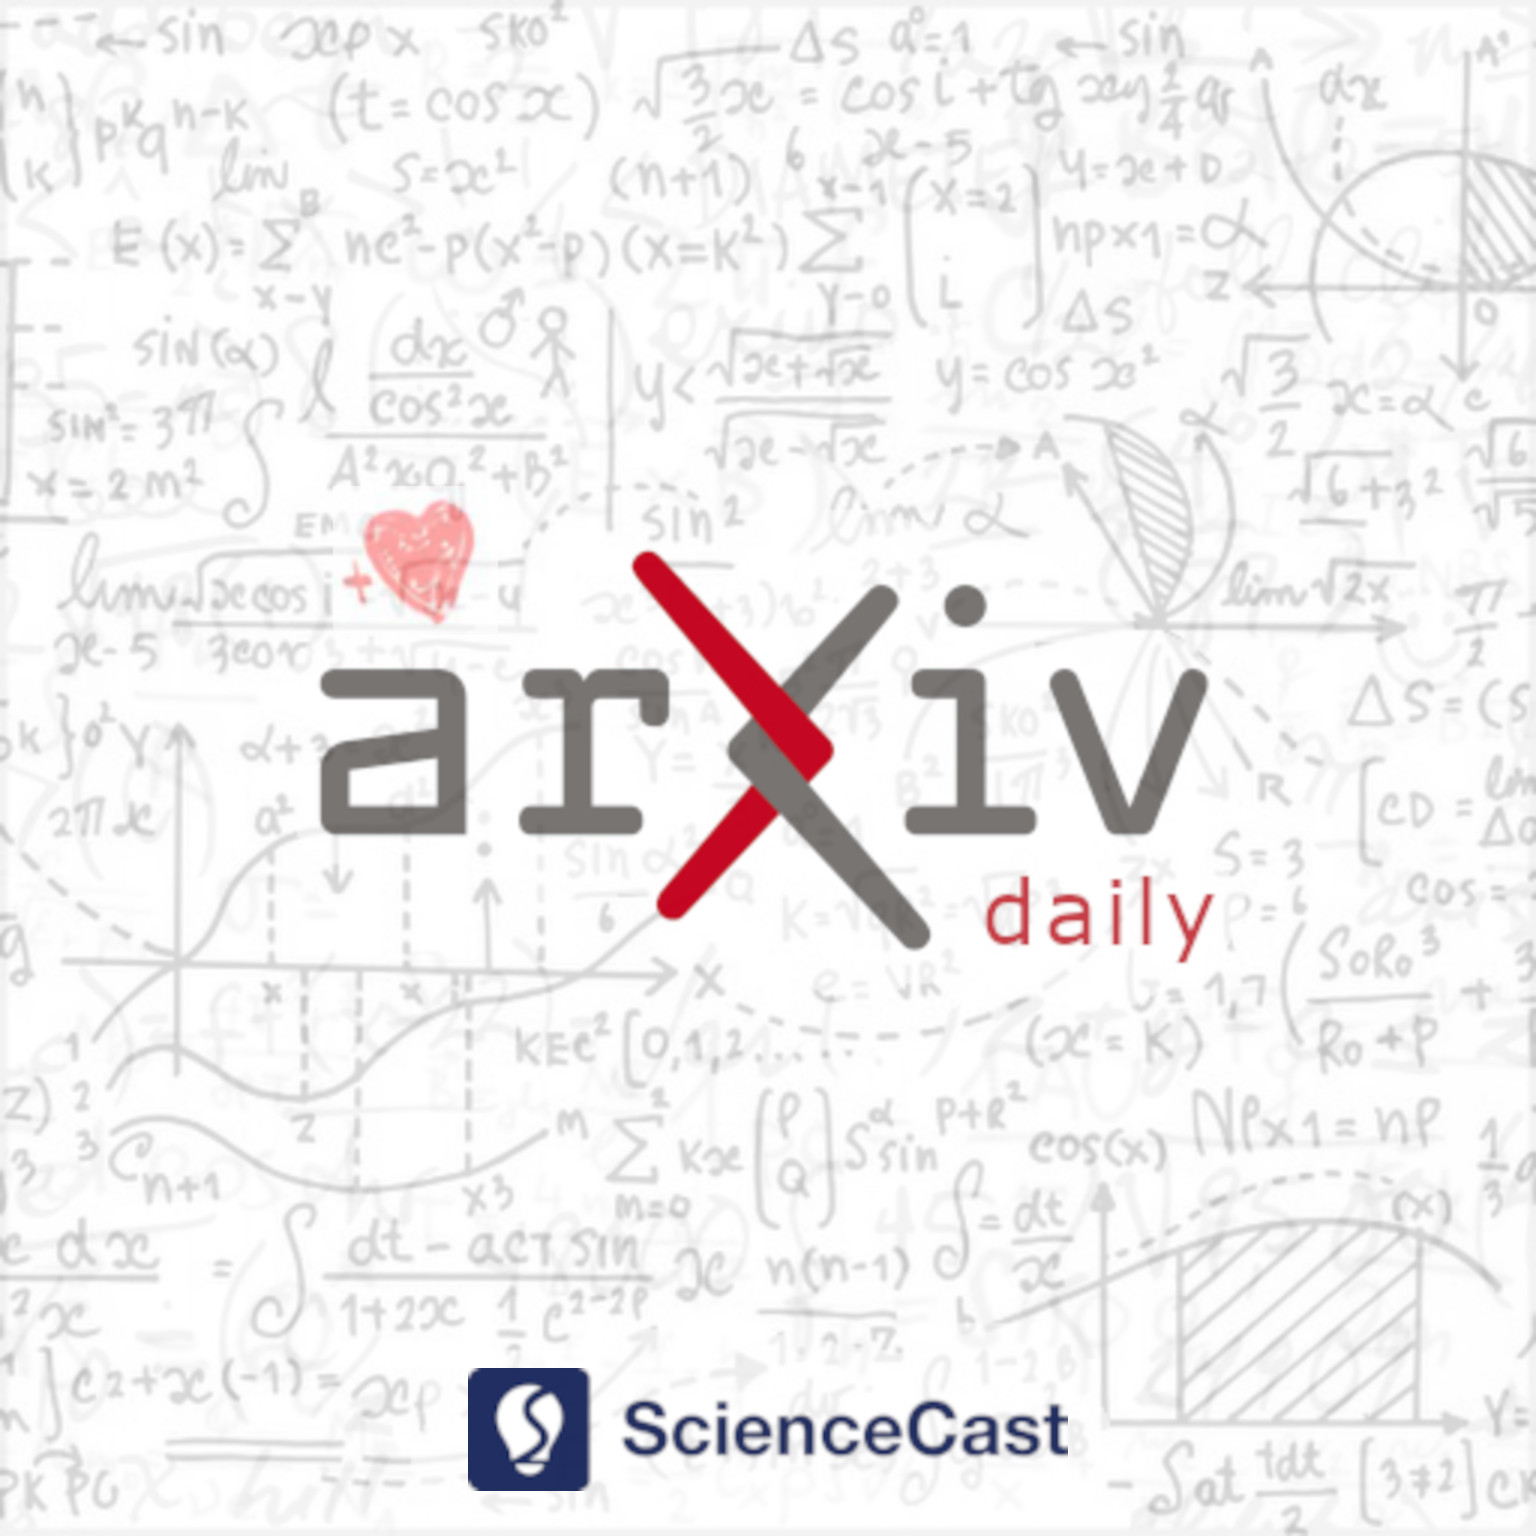 arXiv daily: Optimization and Control